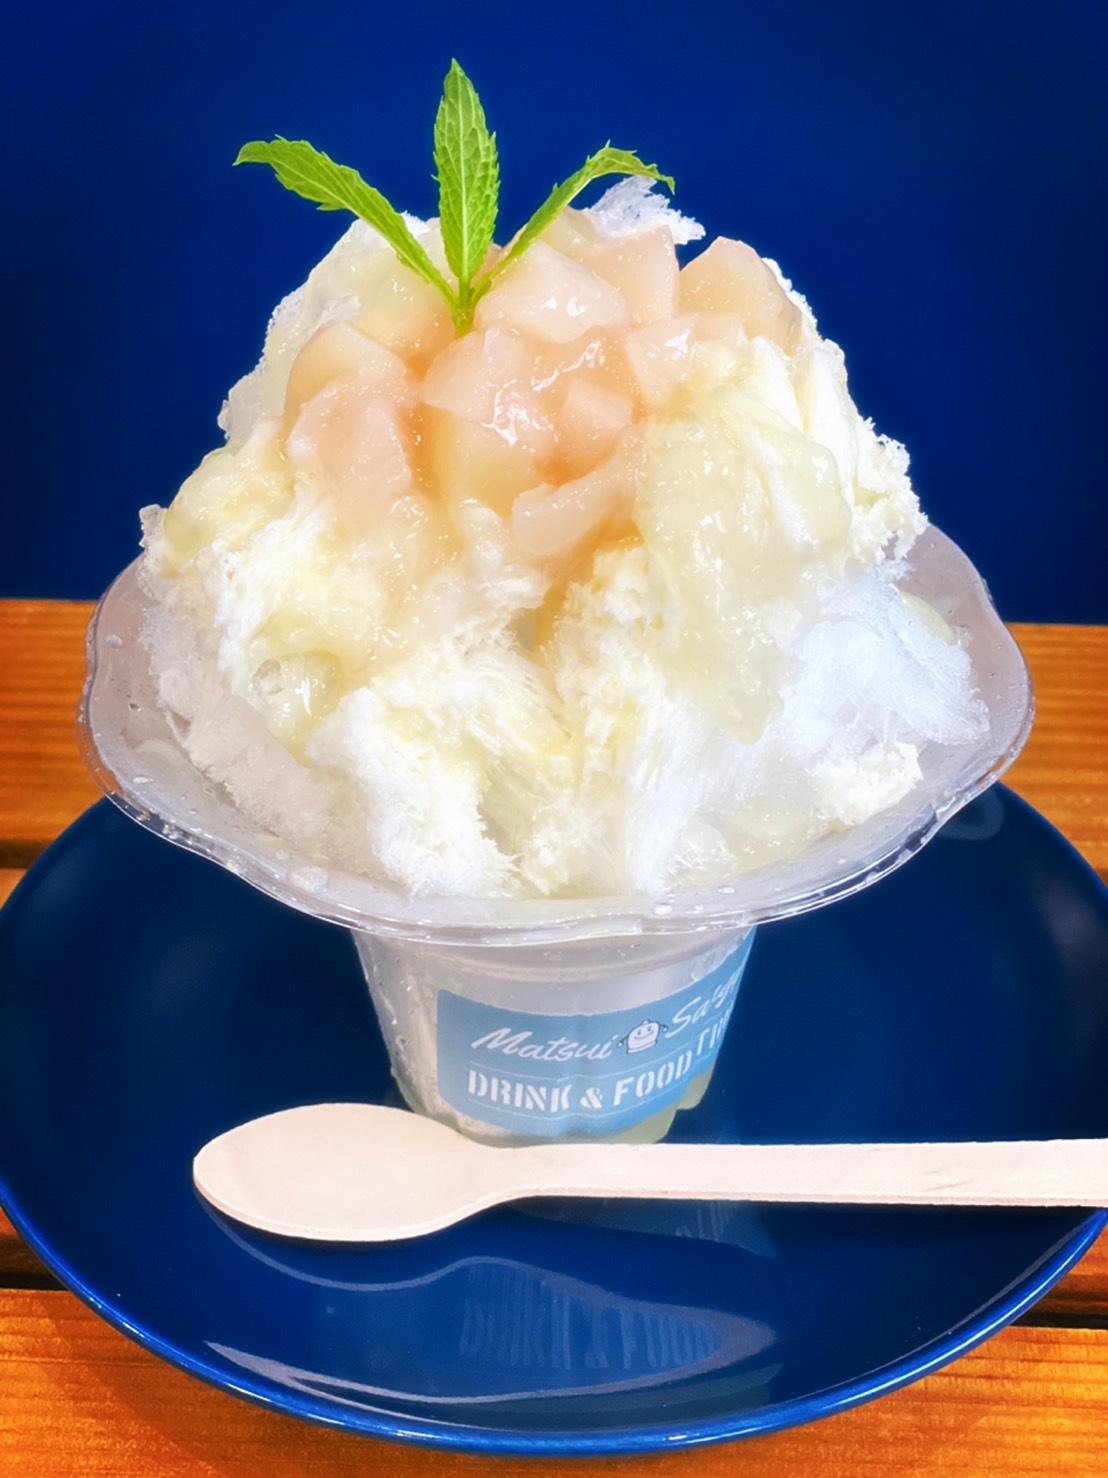 Matsui Sangyou's　自家製Wソース桃ミルクかき氷